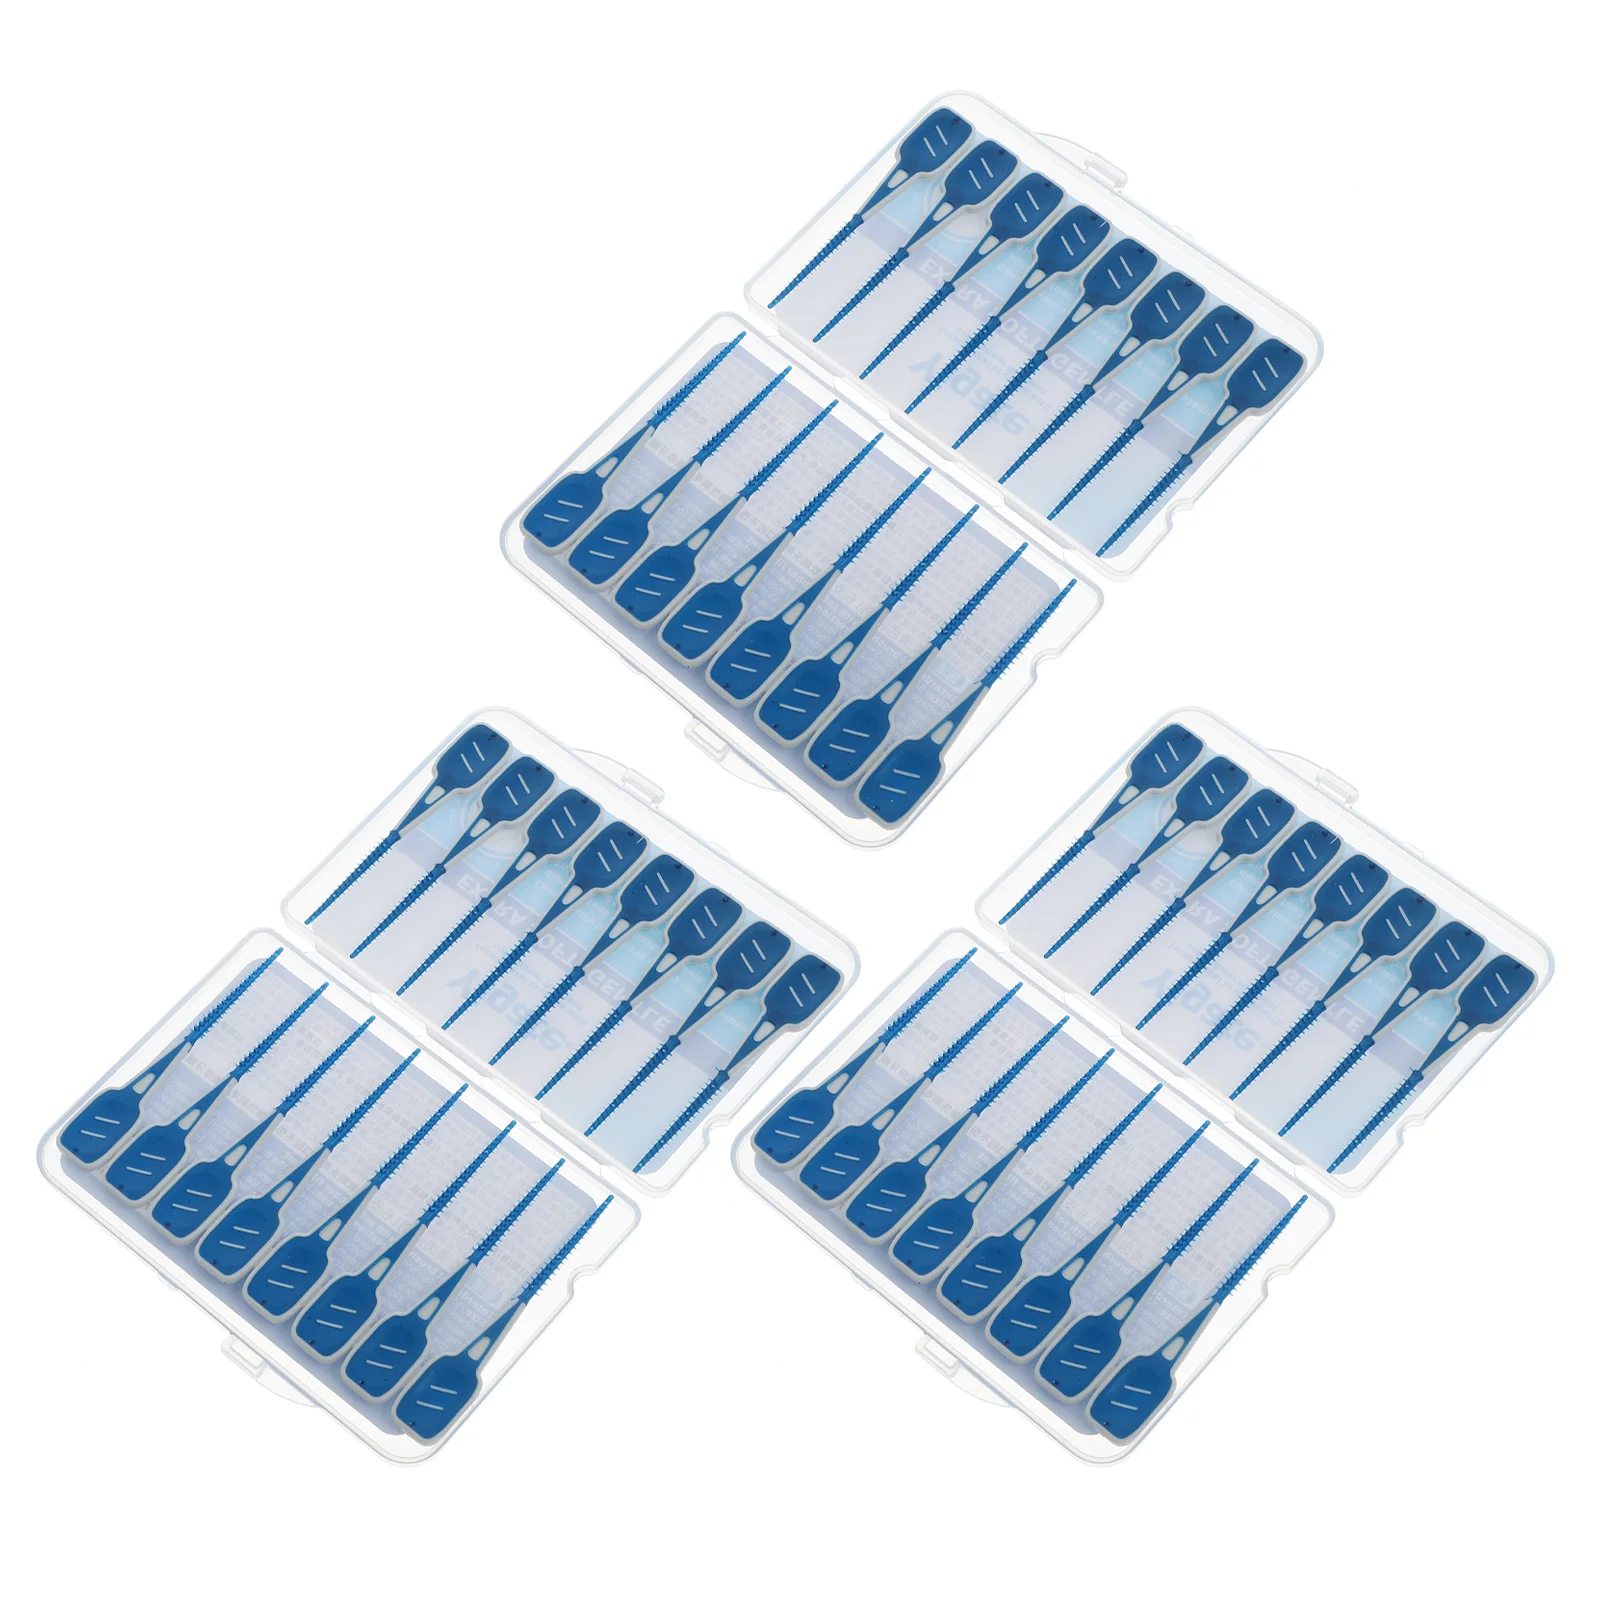 

48 Pcs Interdental Sticks Cleaning Scraper Tool Flossing Picks Travel Floss Interdental Brush Care Brushes